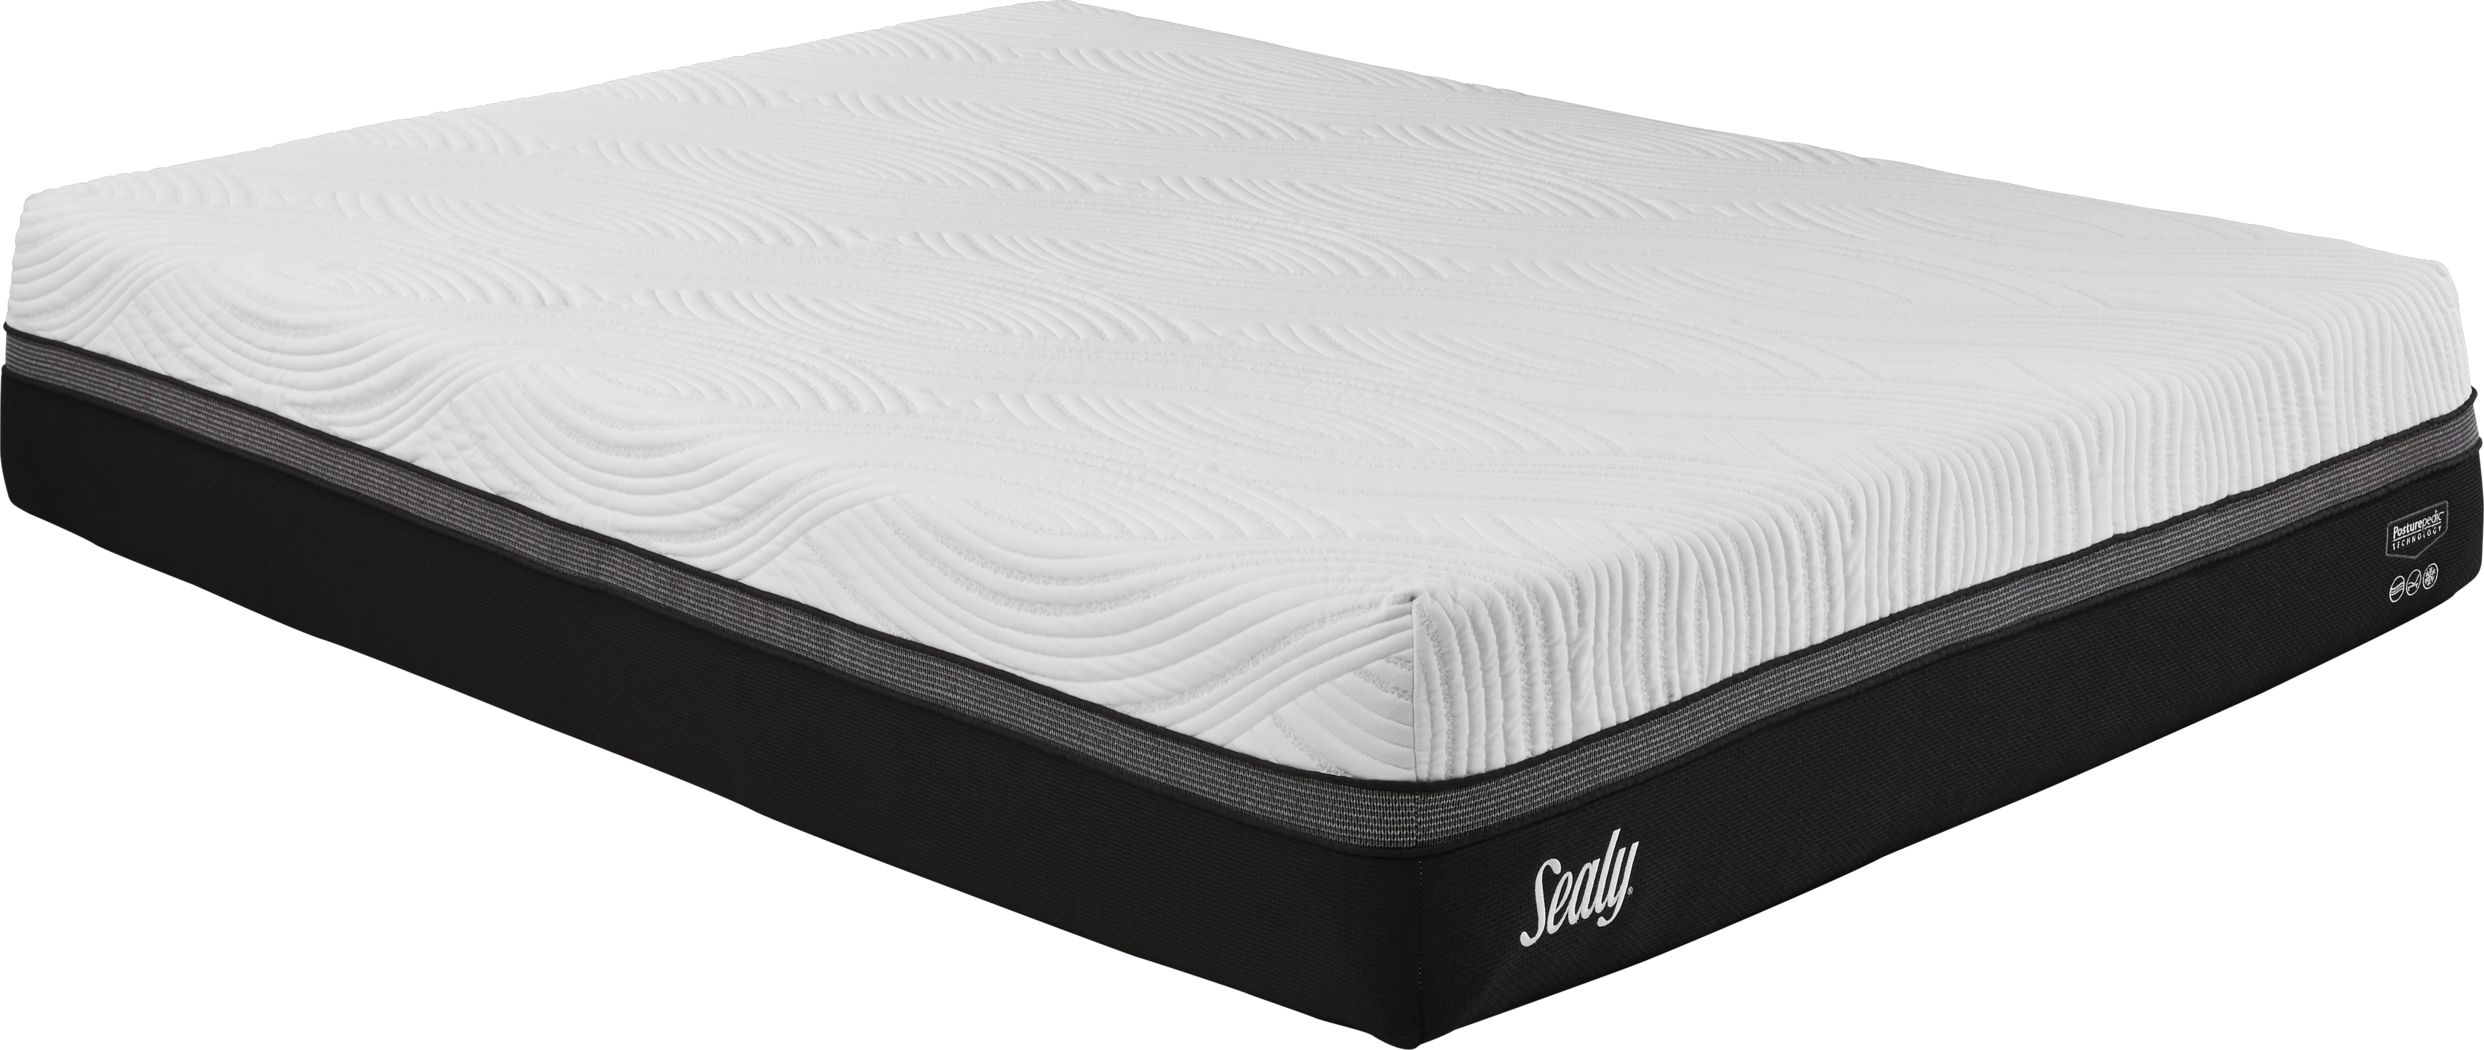 02319761 sealy king size mattress